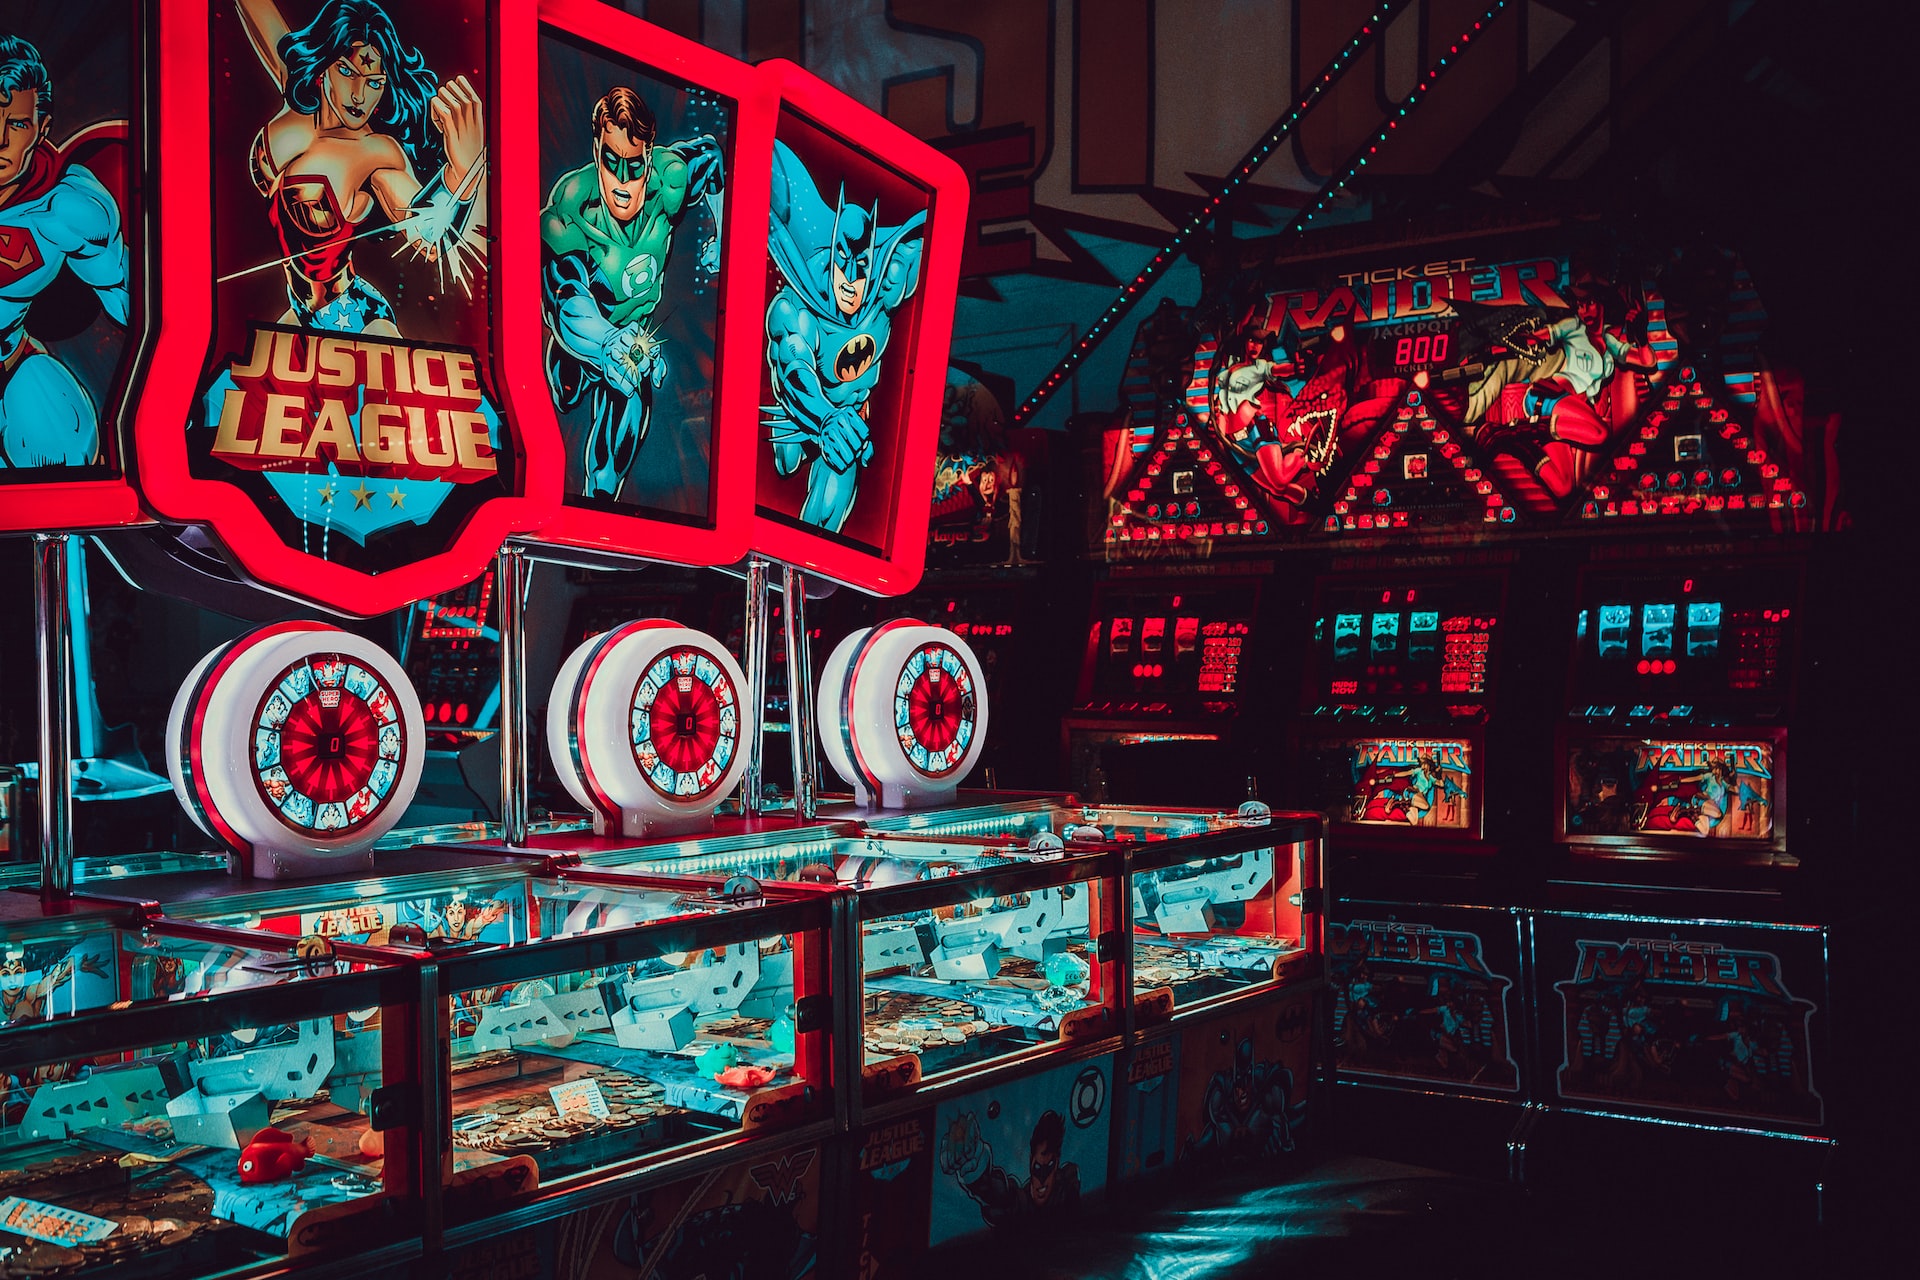 A dark arcade with neon games.